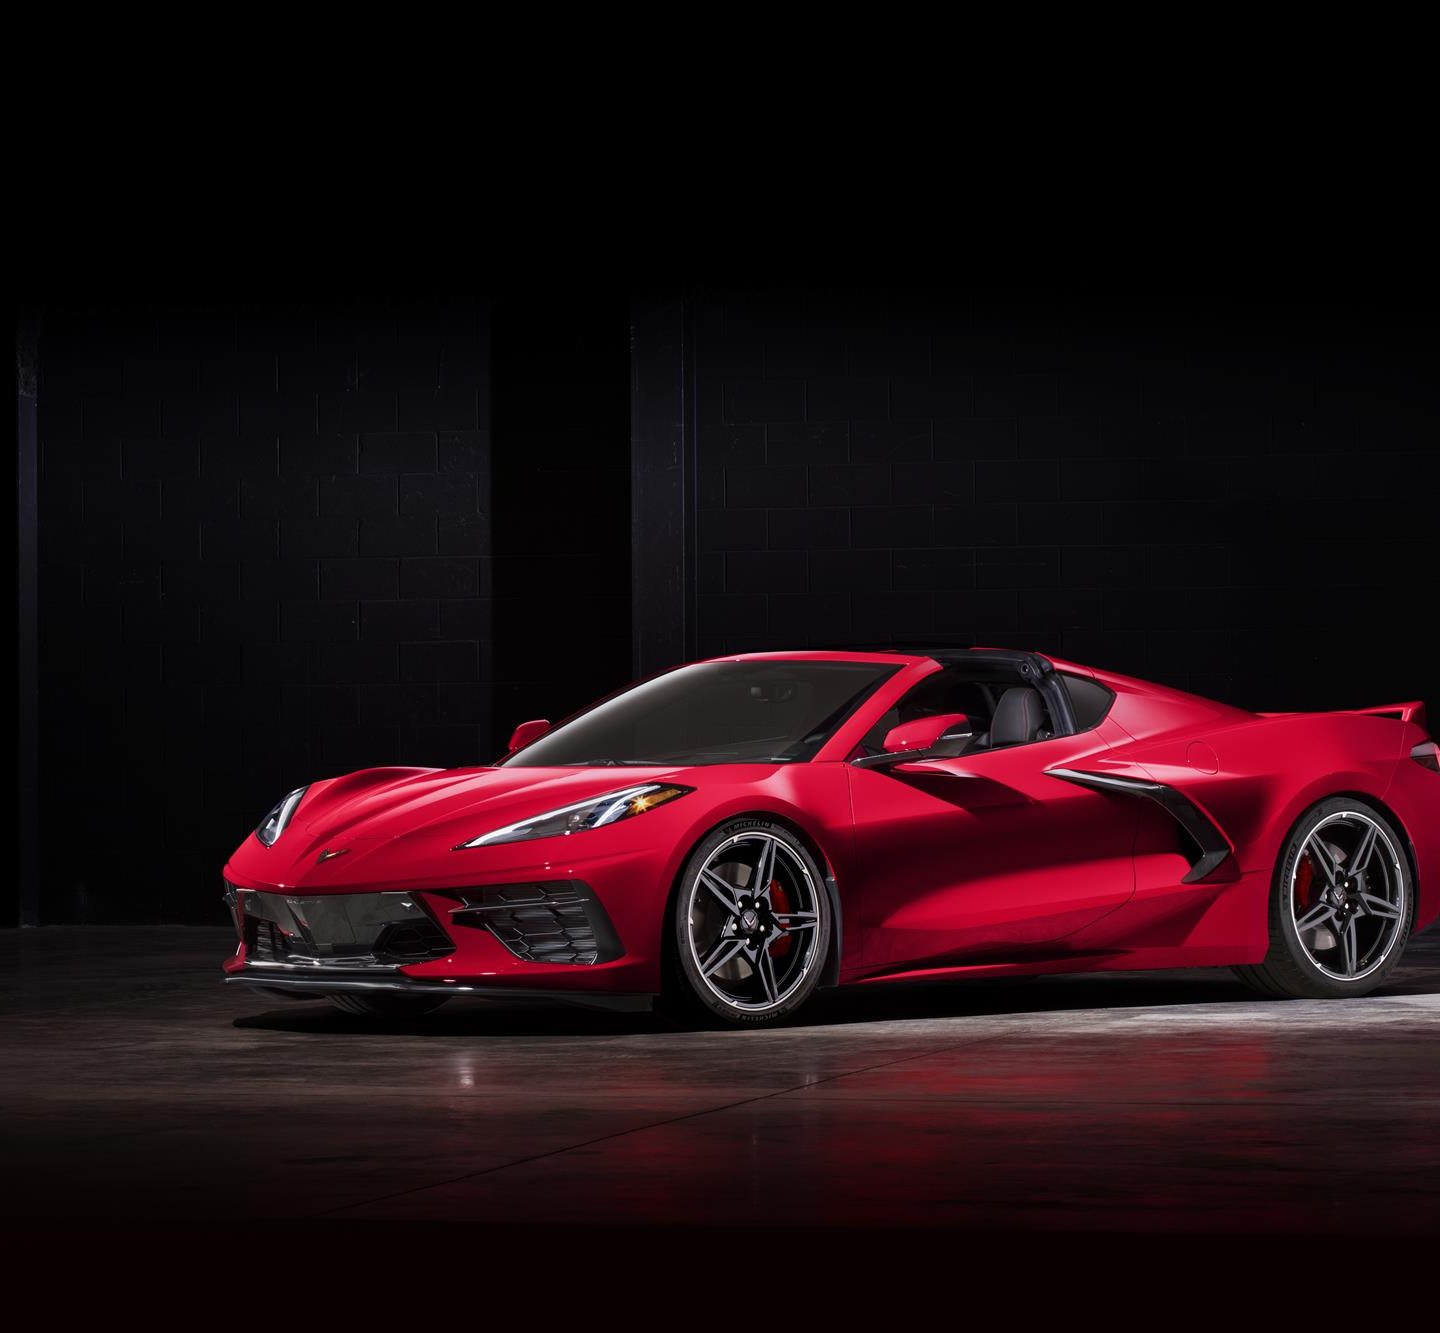 2020 Stingray revealed as first ever mid-engine Corvette